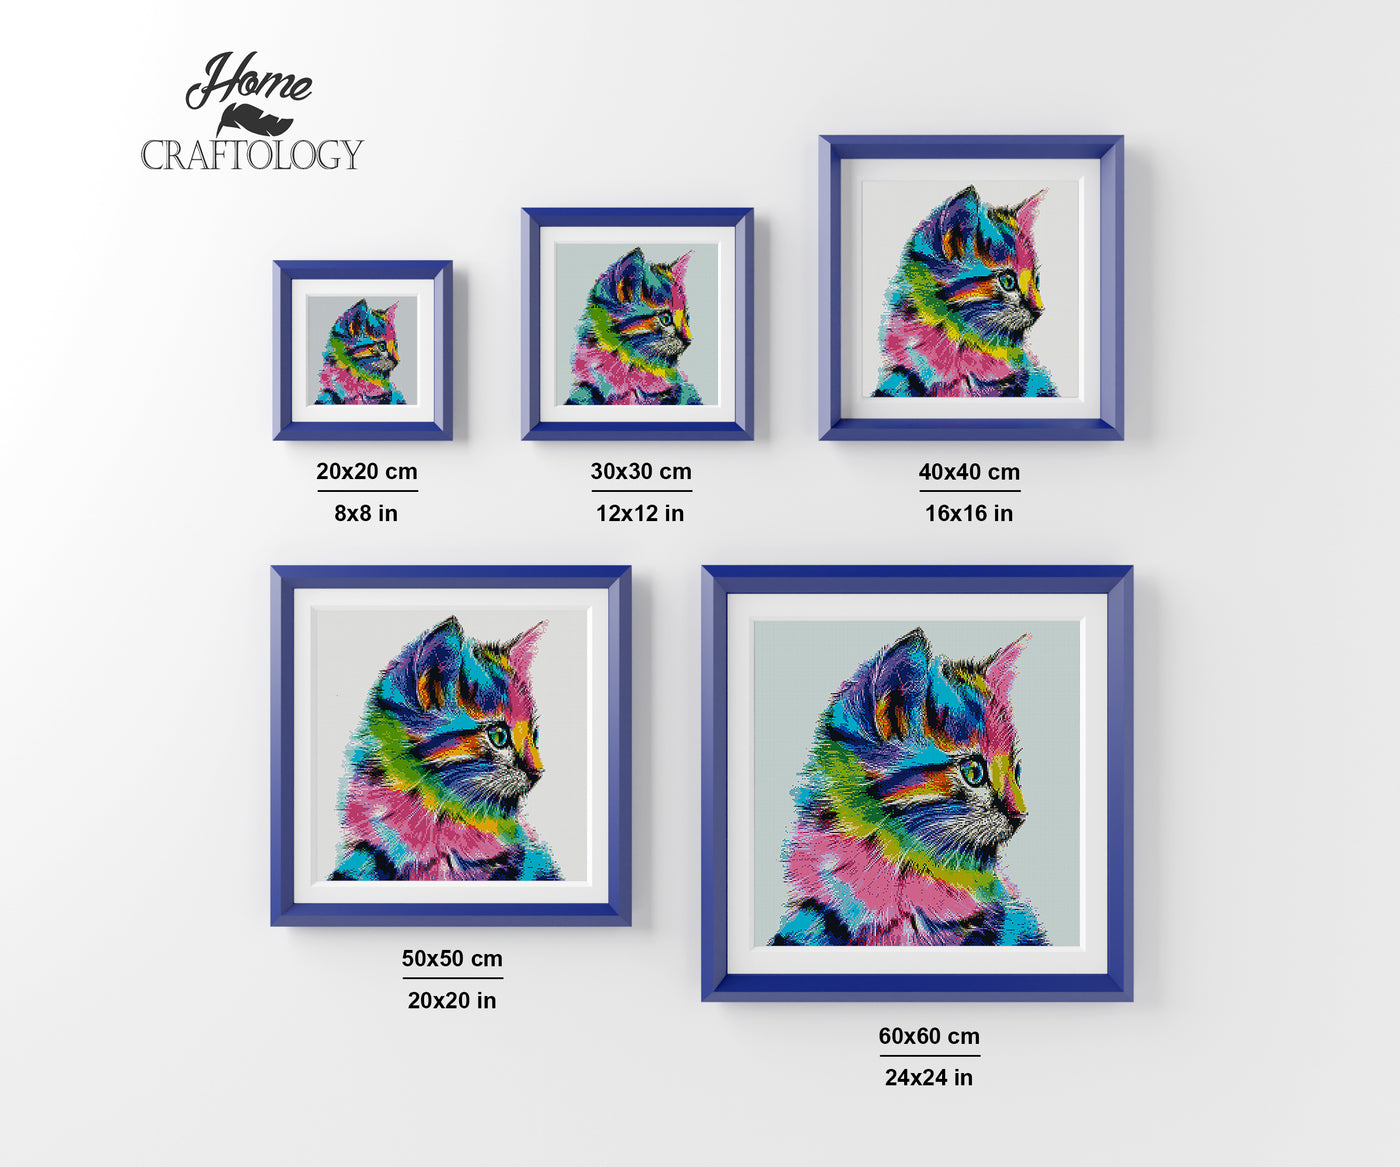 Colorful Cat - Premium Diamond Painting Kit